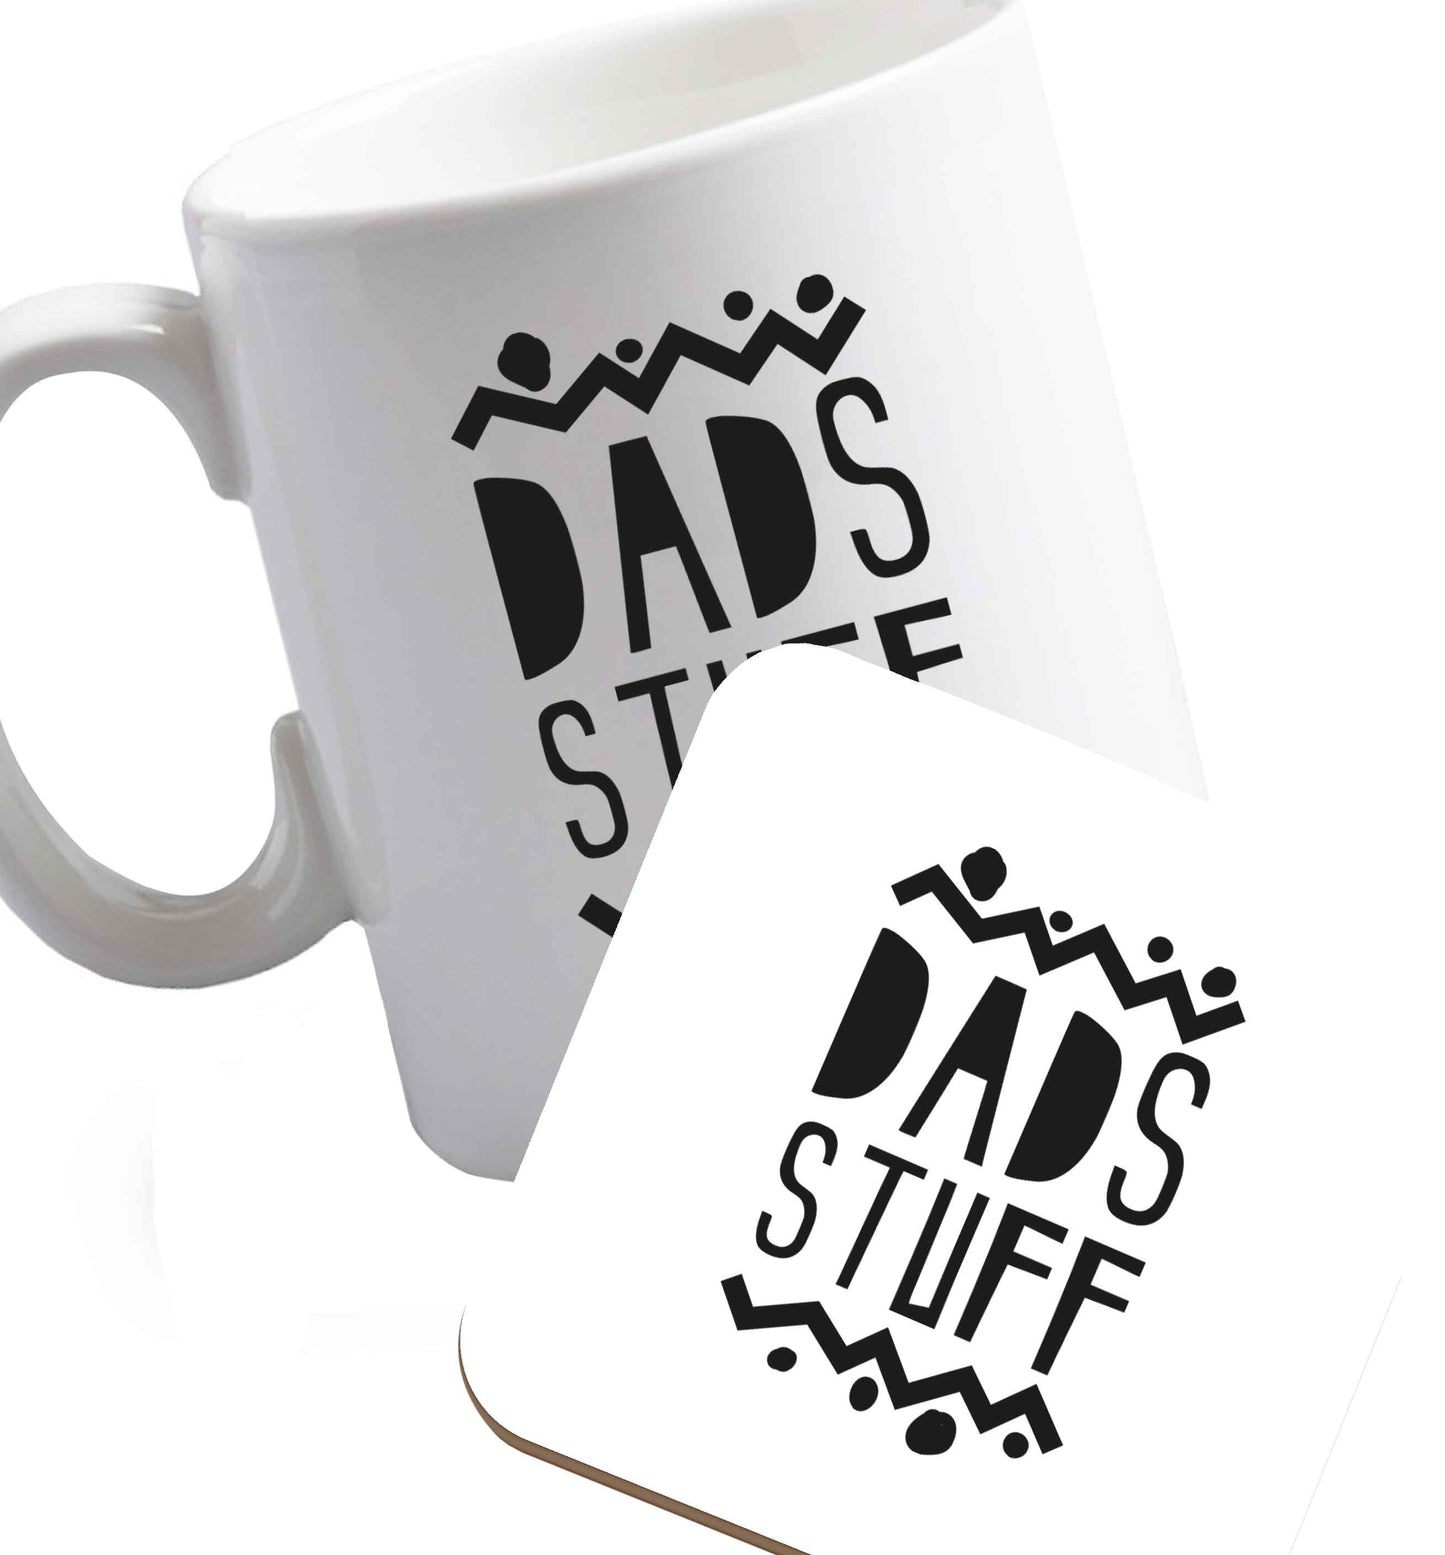 10 oz Dads stuff ceramic mug and coaster set right handed